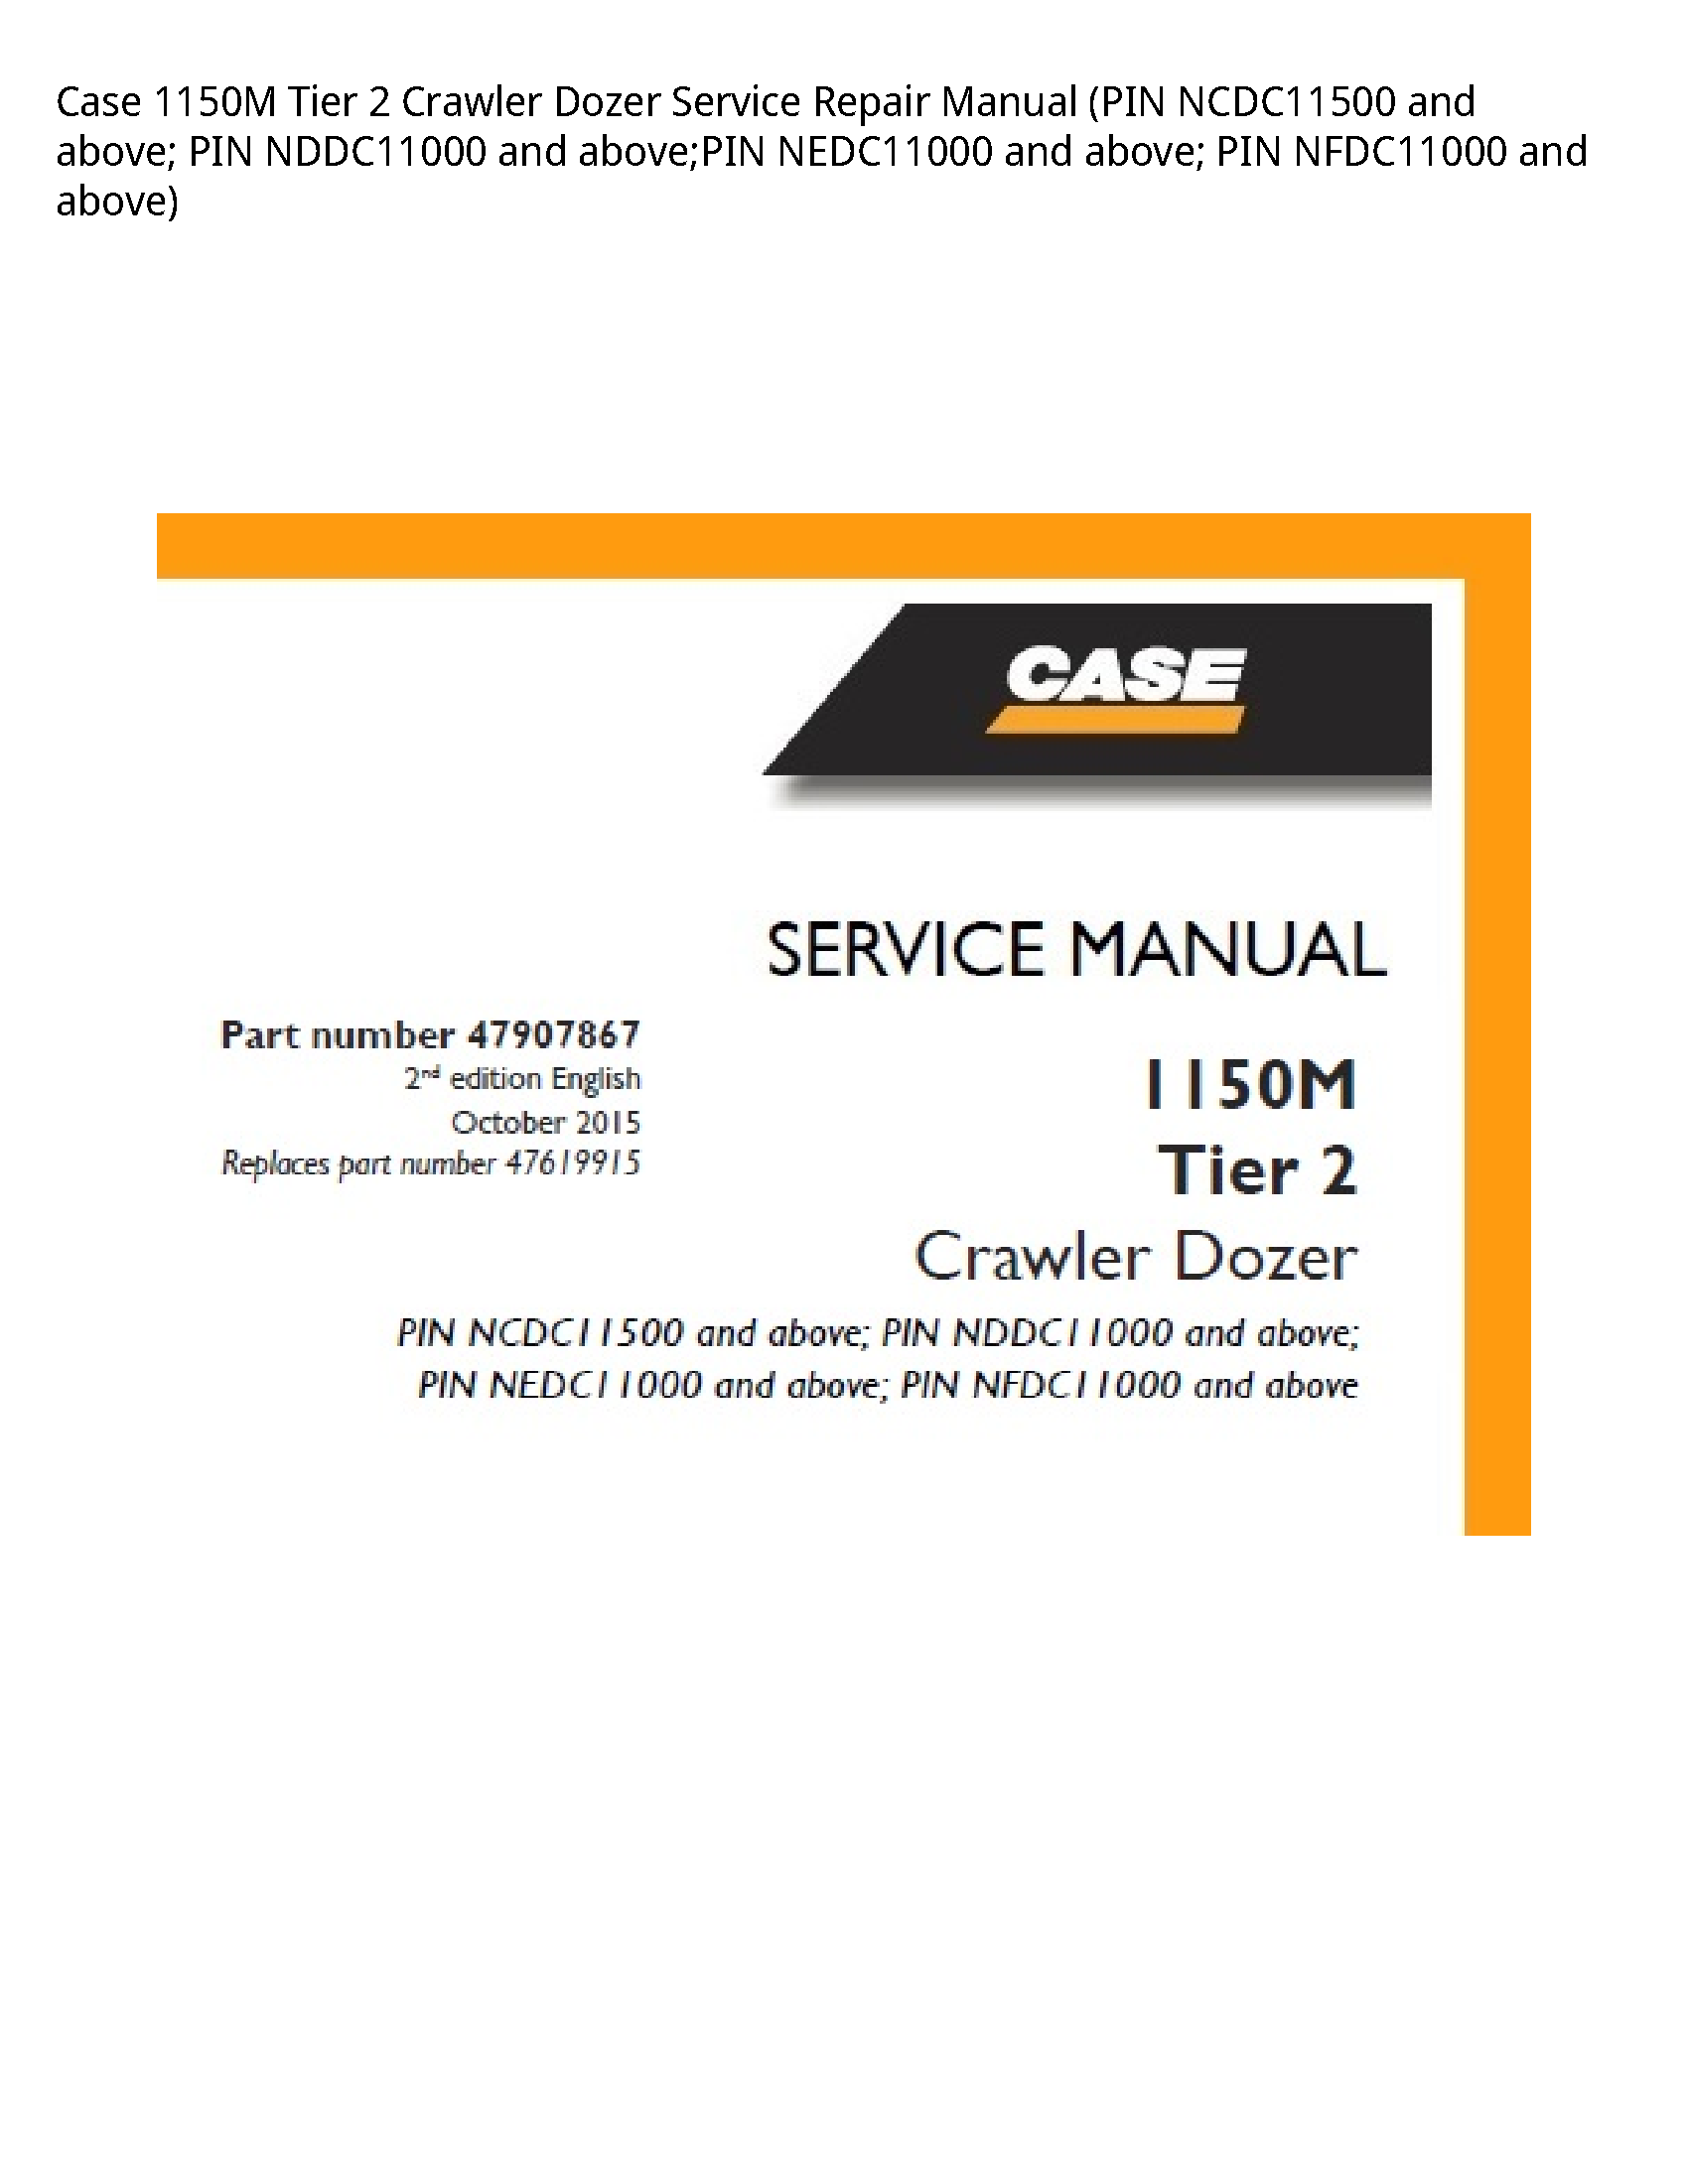 Case/Case IH 1150M Tier Crawler Dozer manual